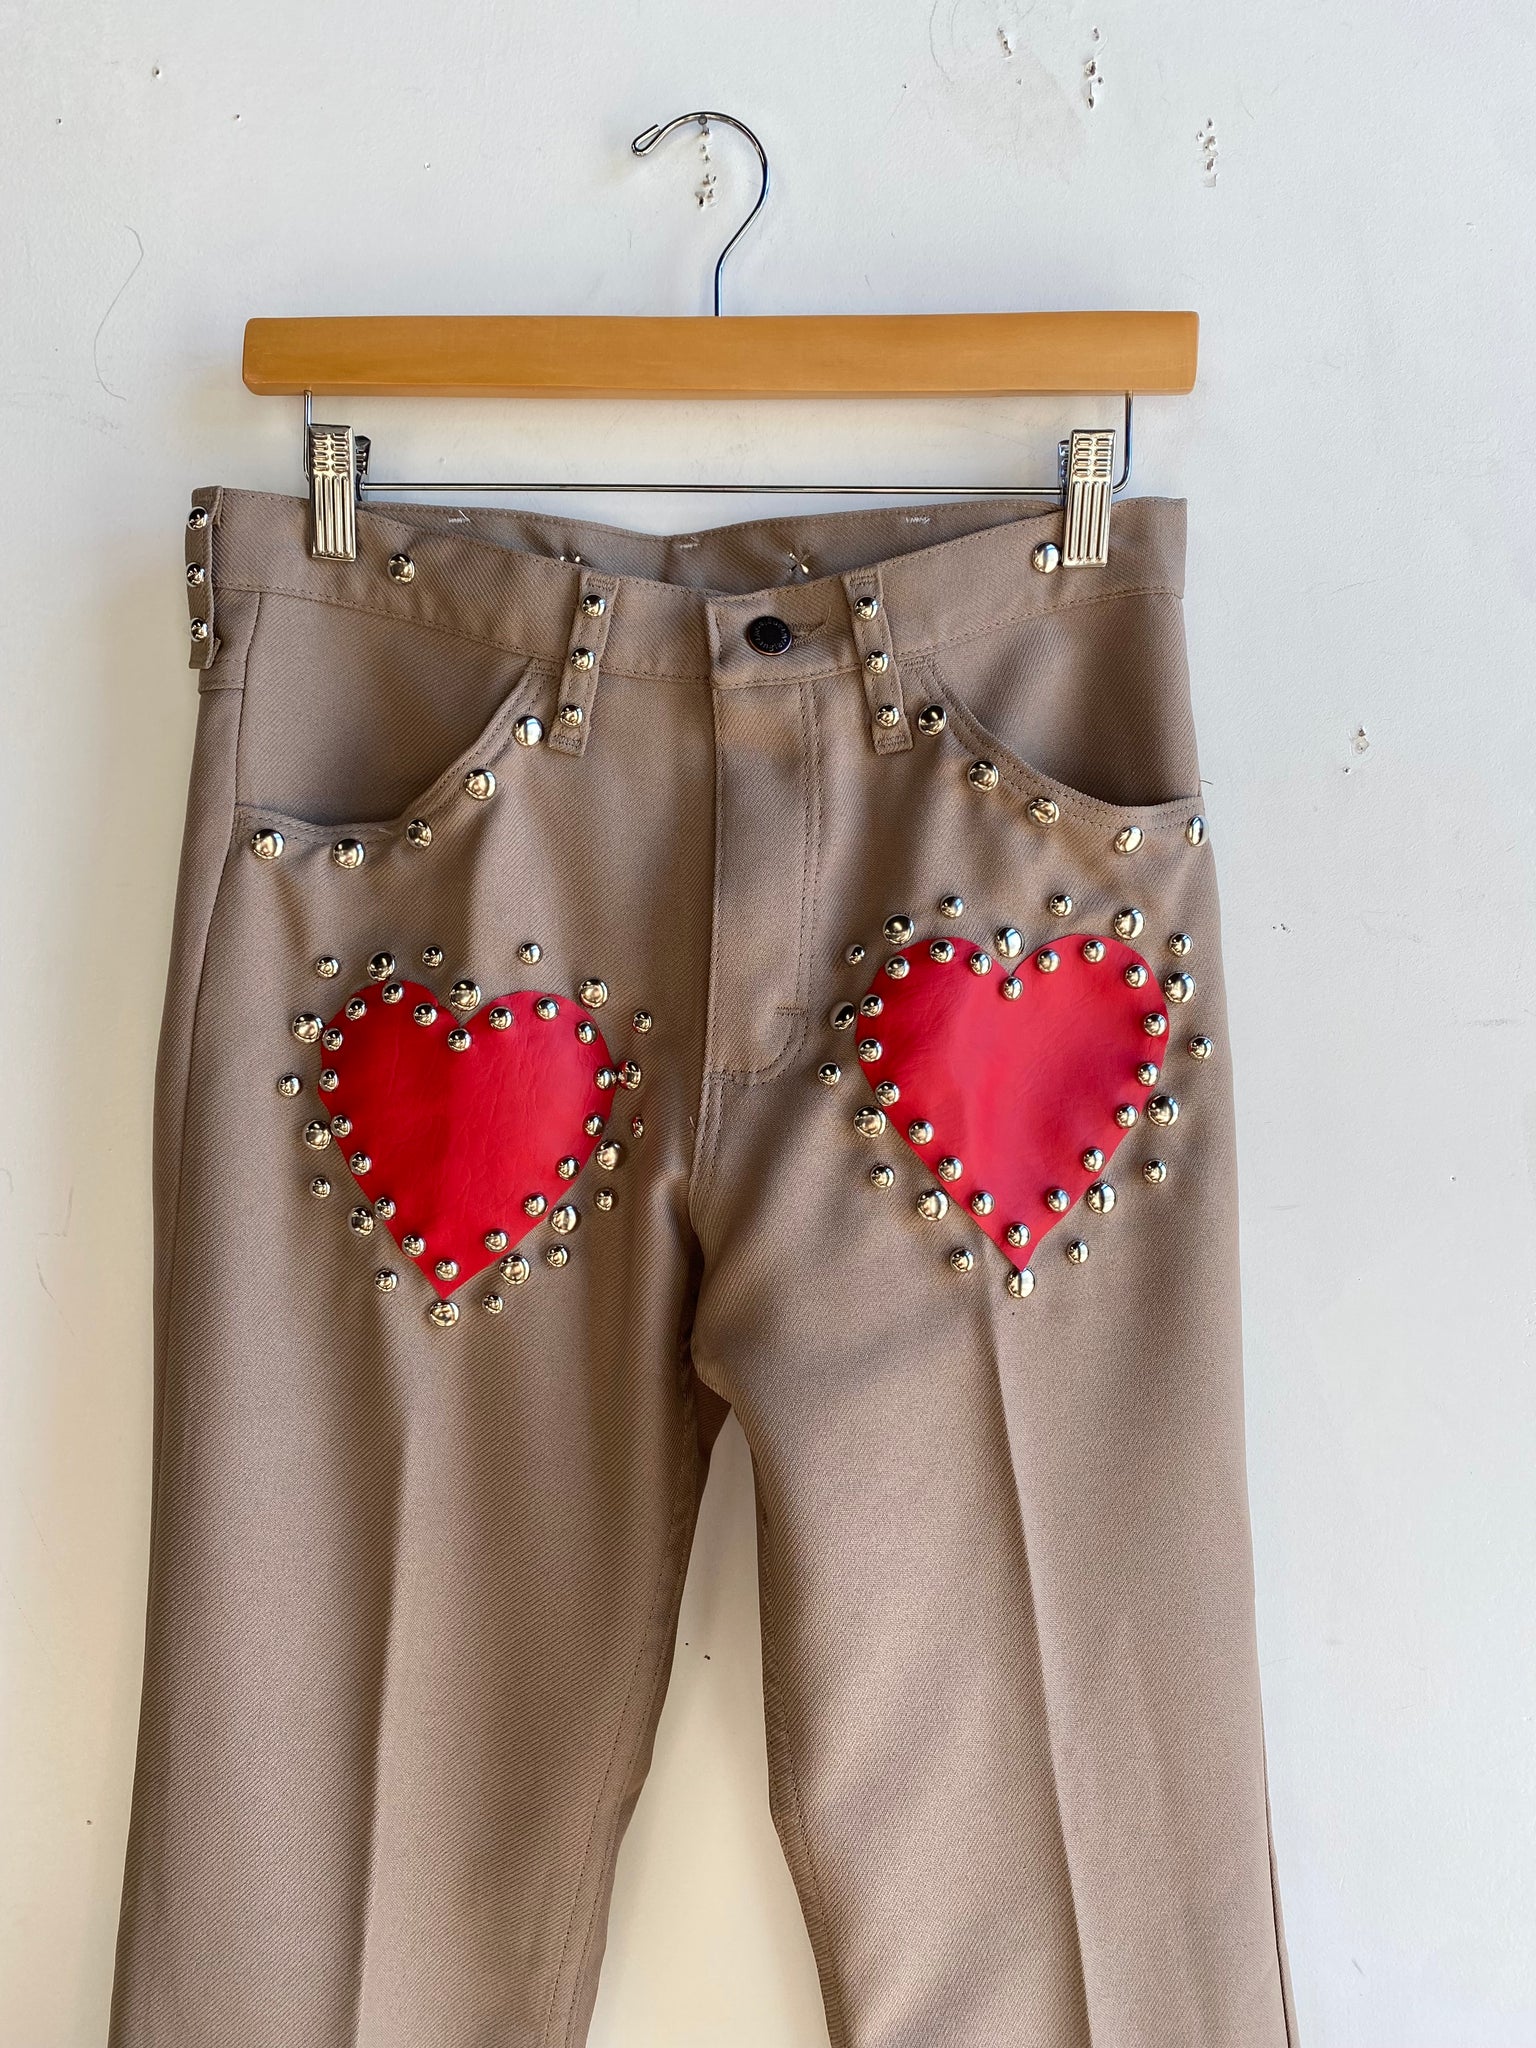 The Firey Valentine Pants